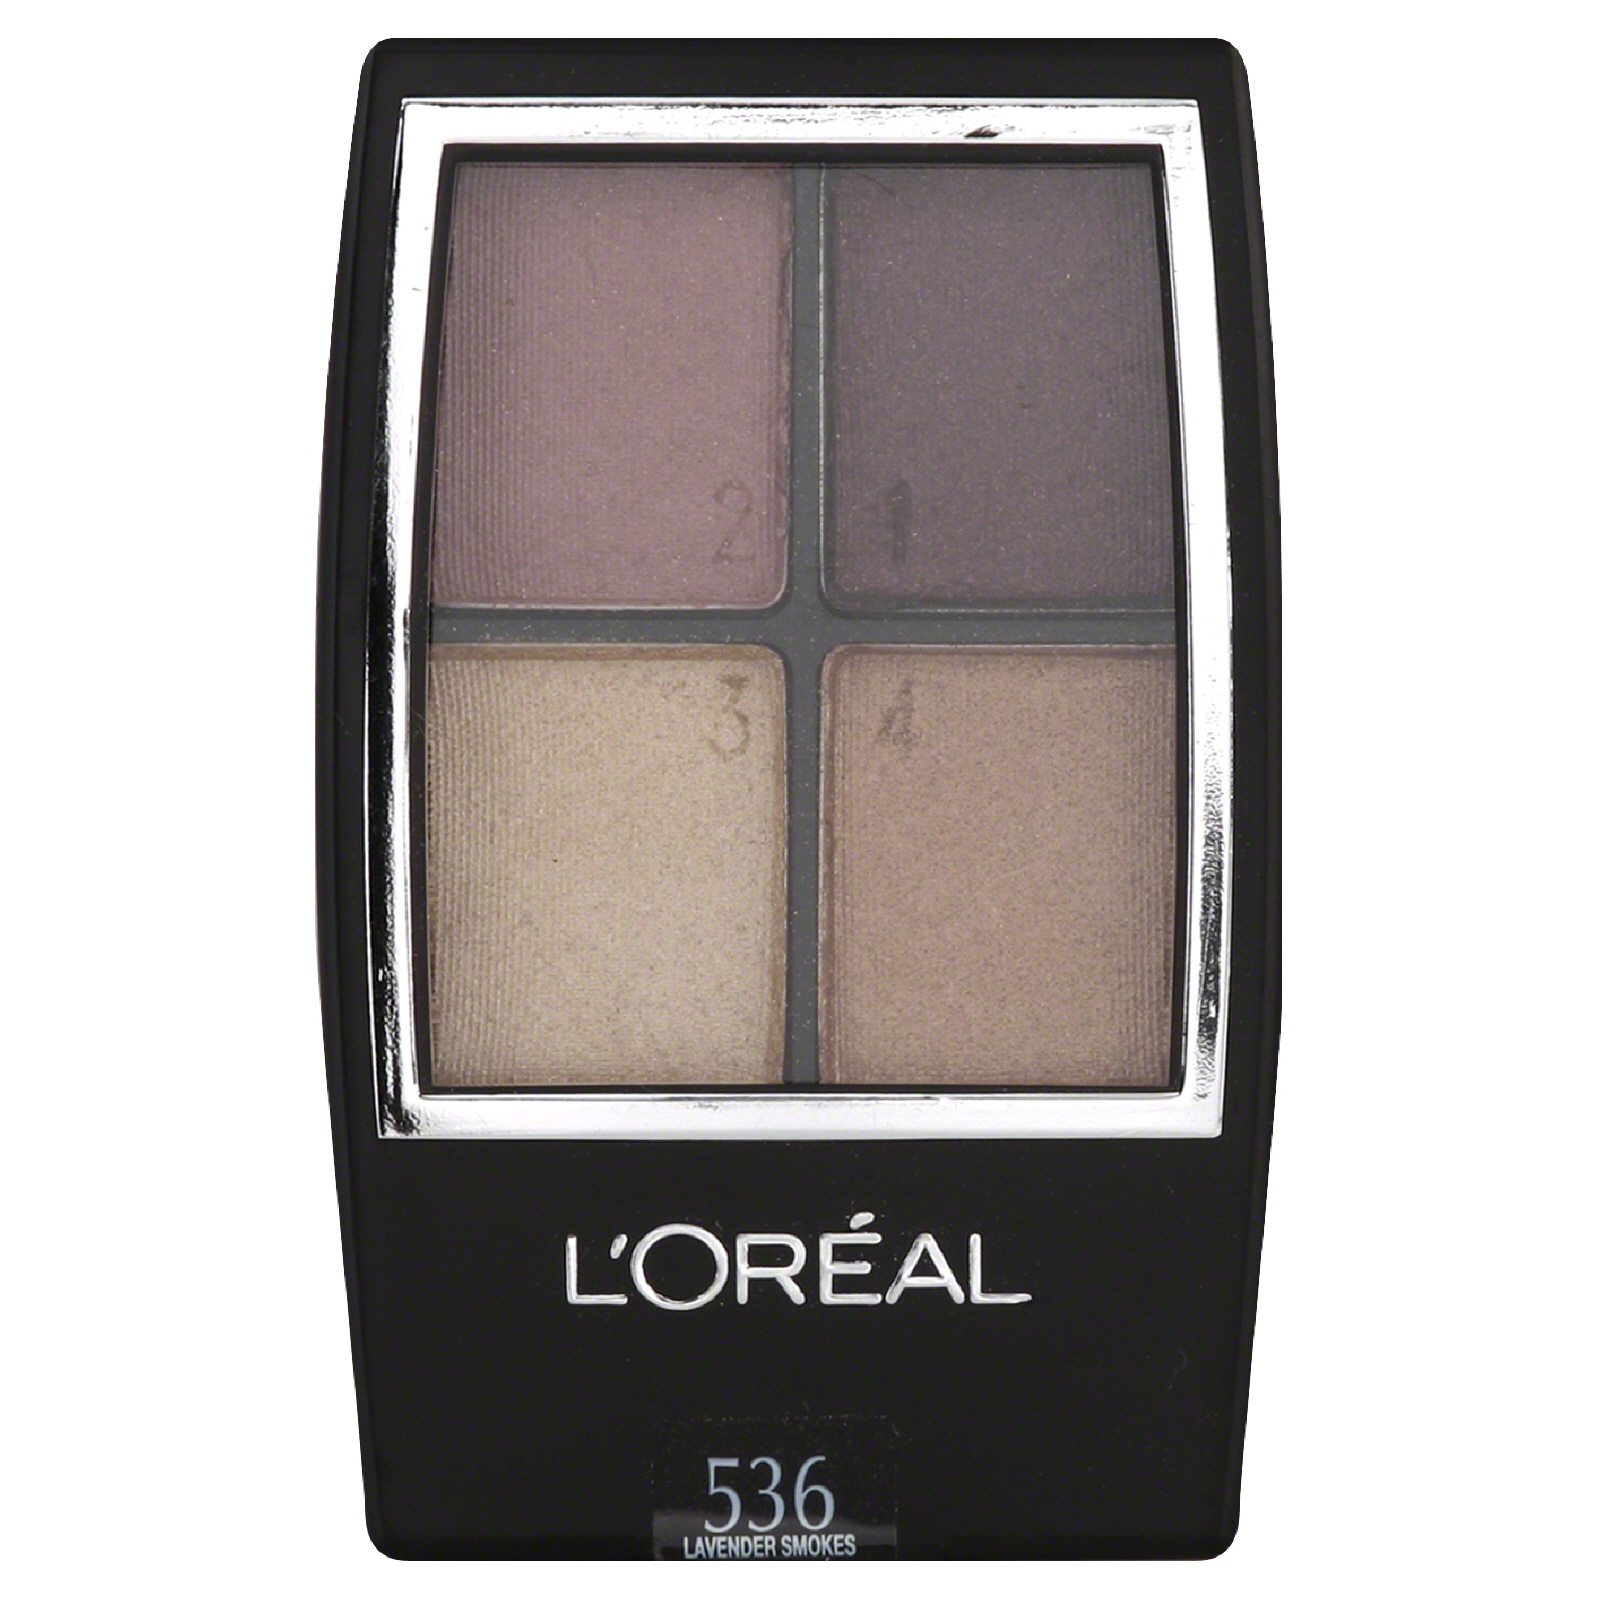 L'Oreal Studio Secrets Professional Eye Shadow, Color Smokes, Lavender Smokes 536, 0.16 oz (4.8 g)